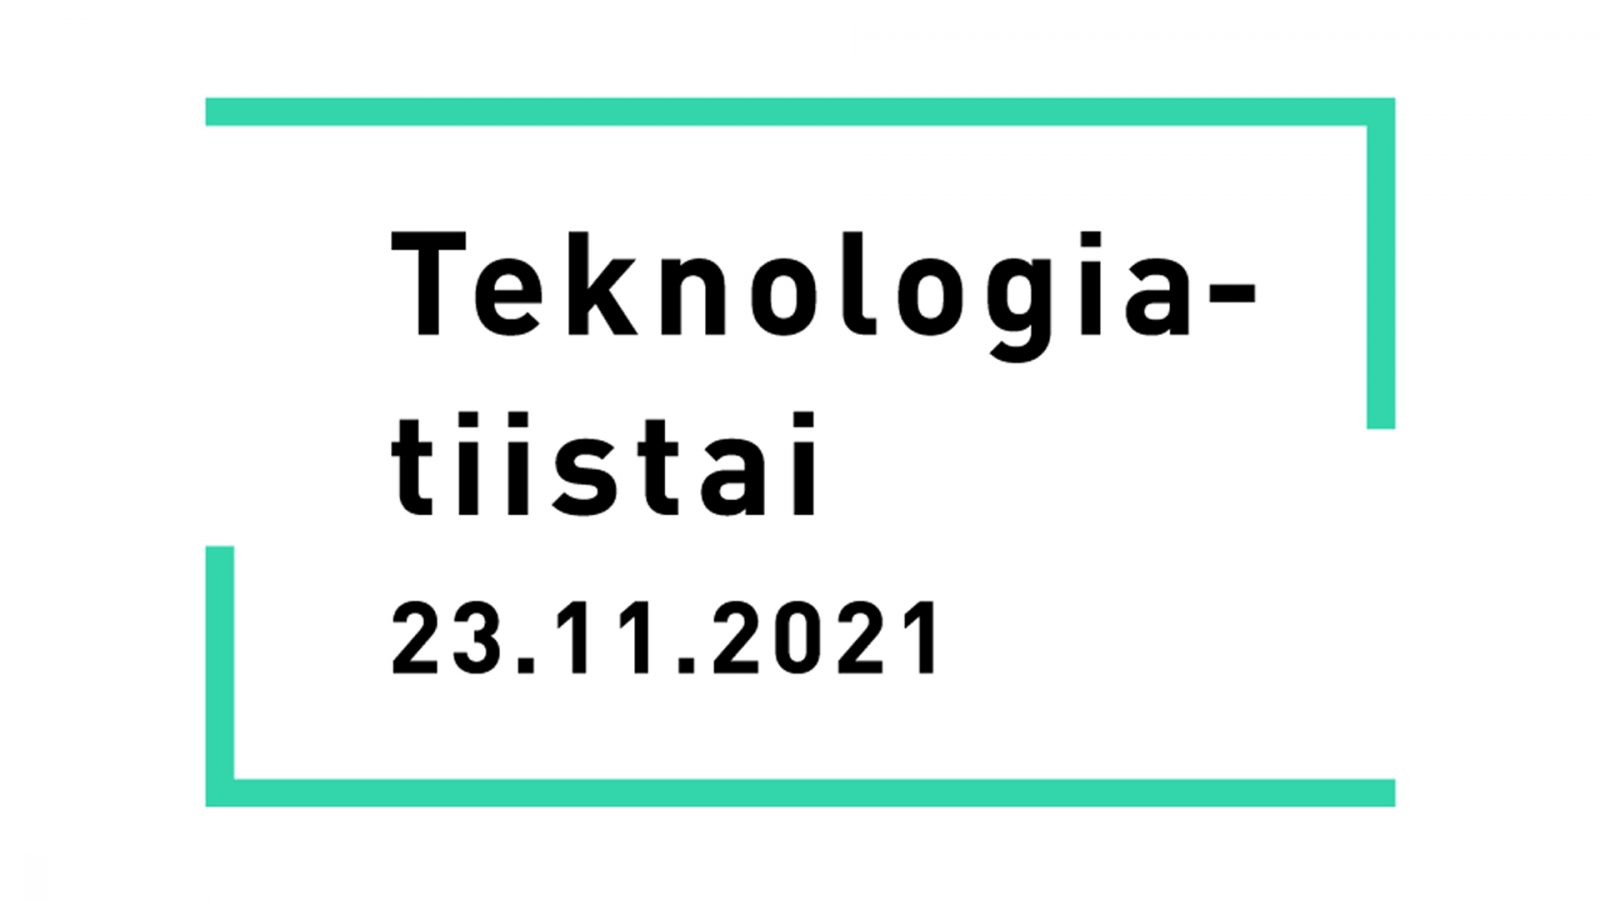 Teknologiatiistai 2021 logo